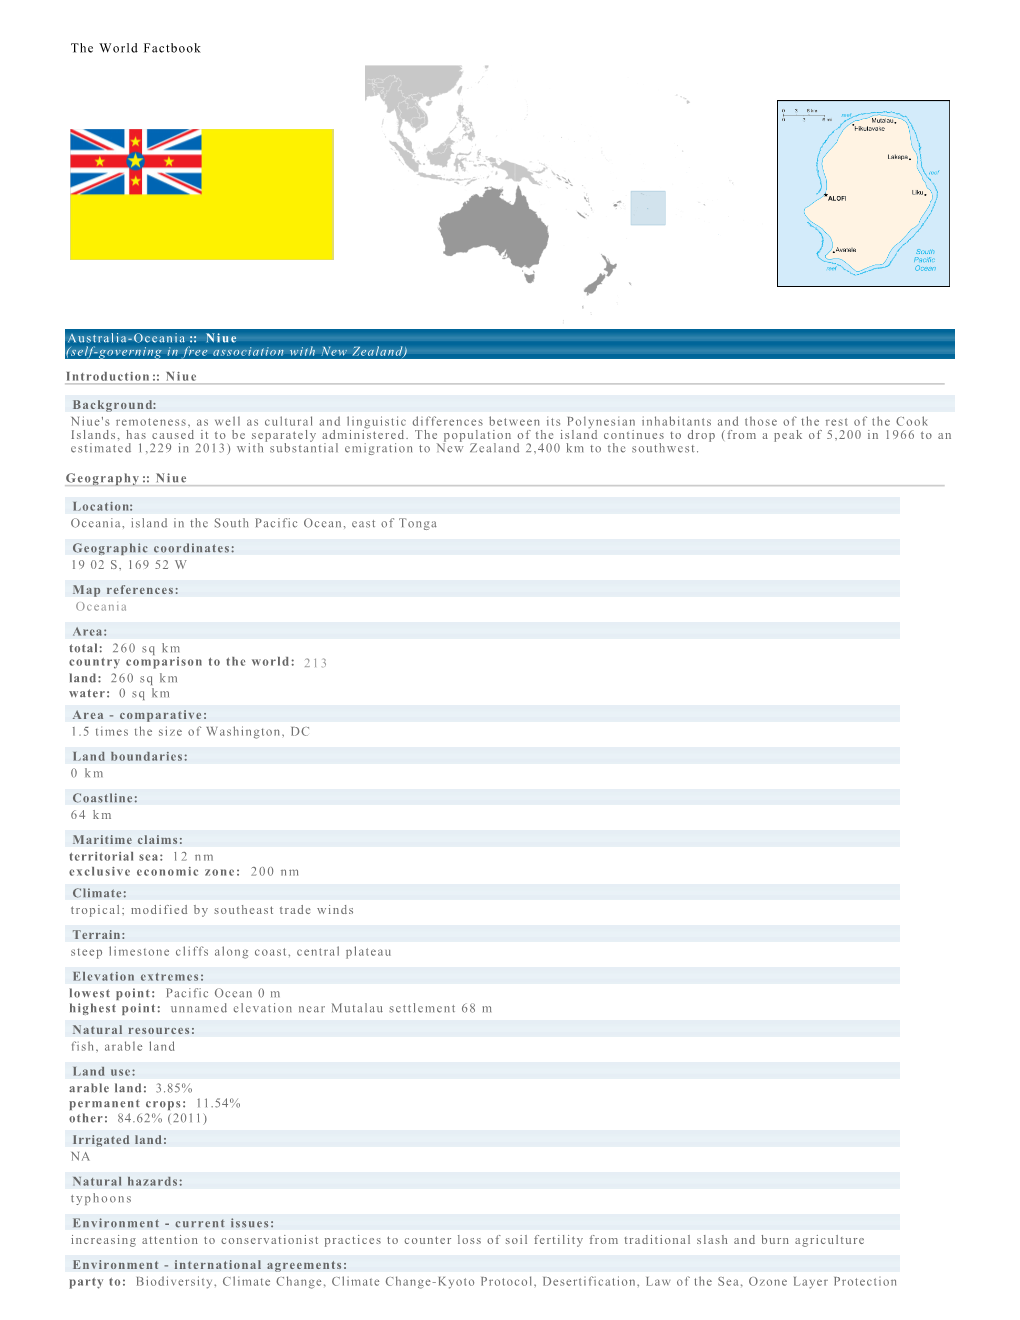 The World Factbook Australia-Oceania :: Niue (Self